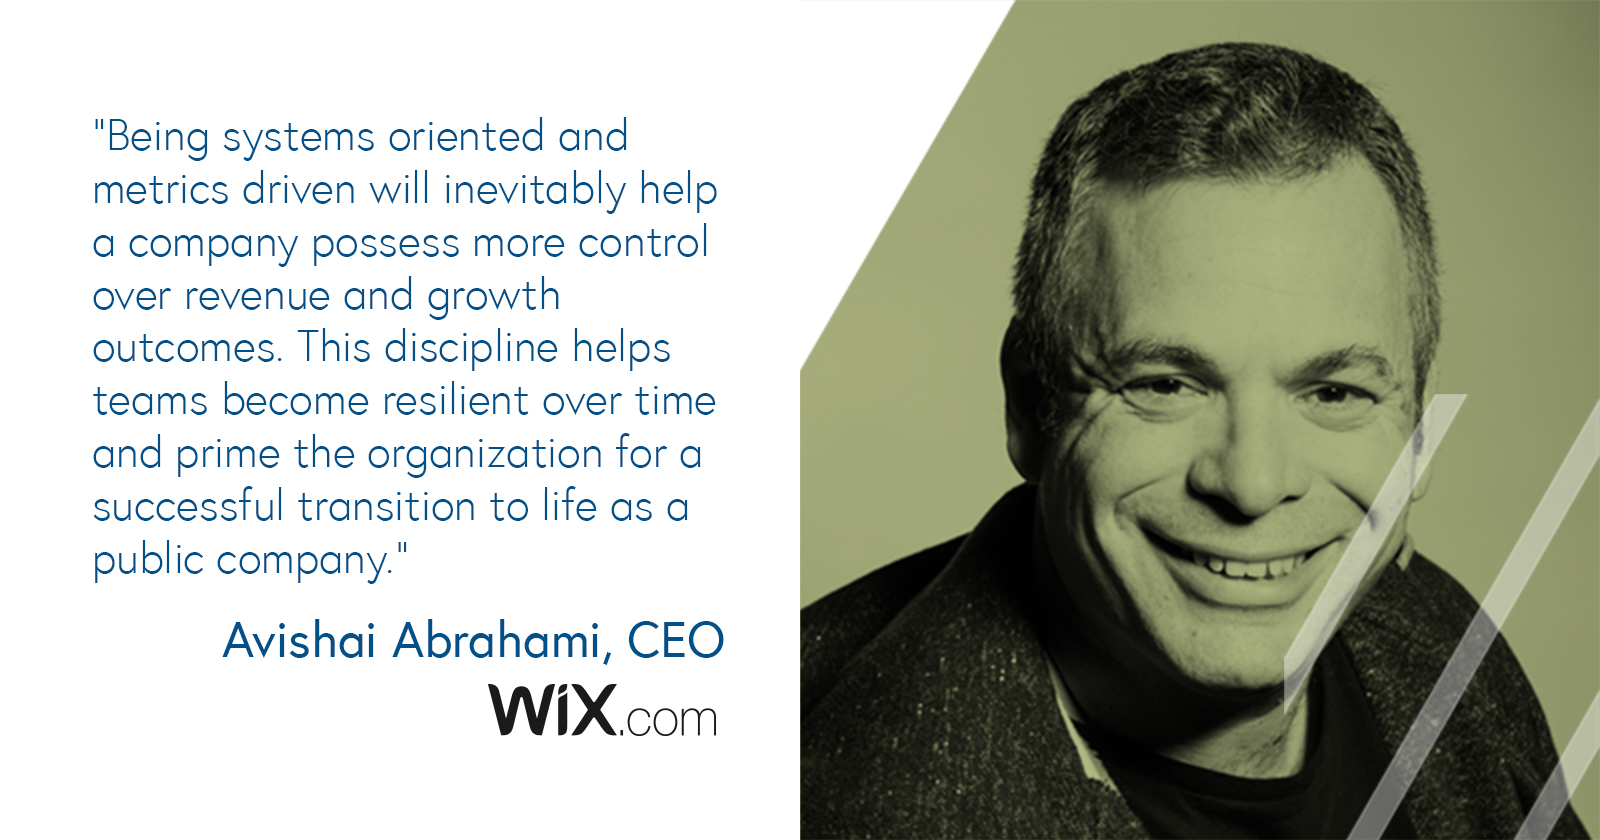 Avishai Abrahami, CEO of Wix.com on being metrics driven as a company goes public 